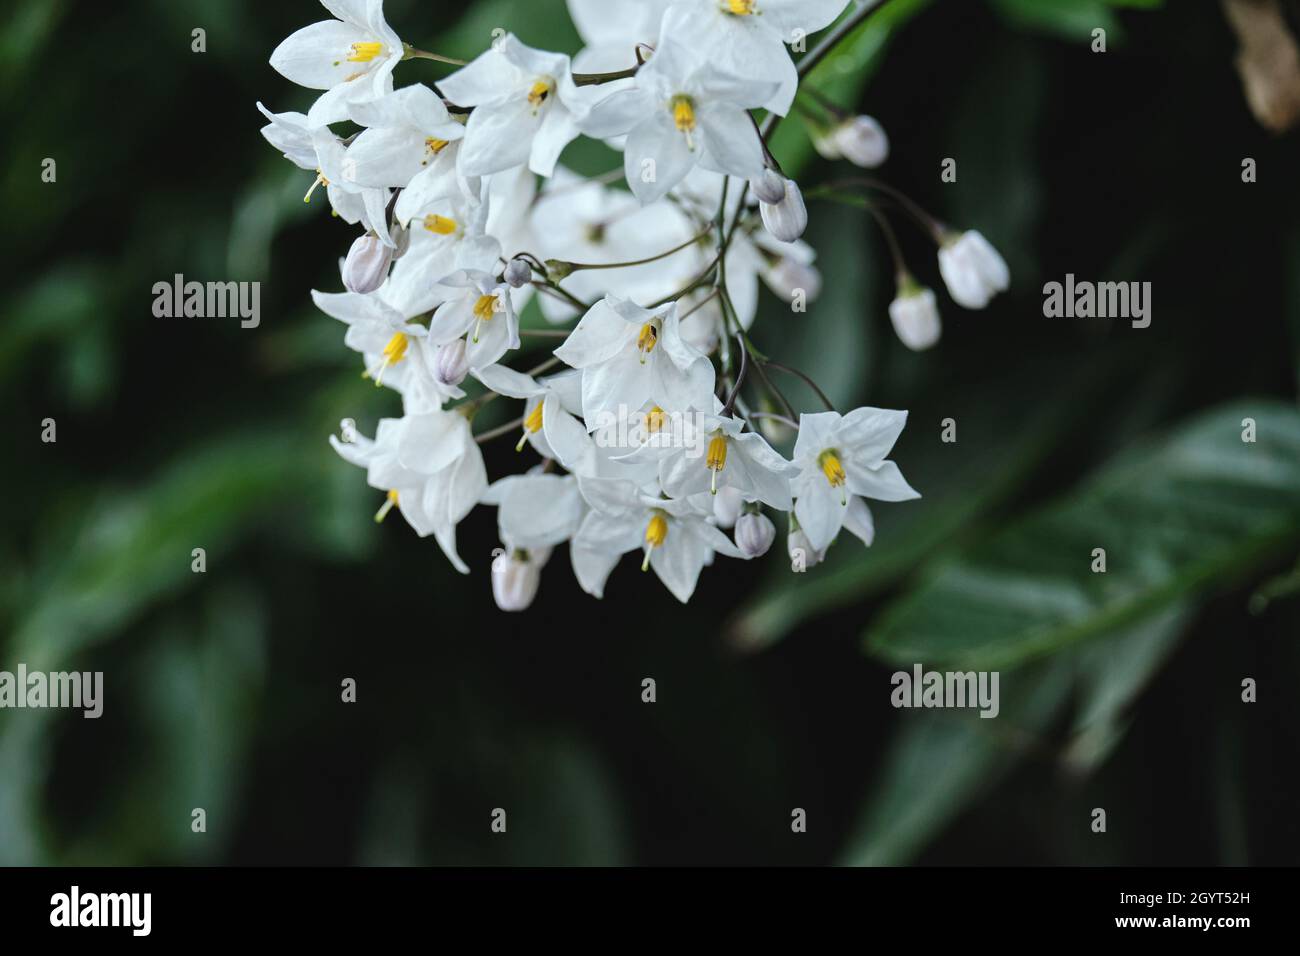 Solanum laxum jasmine nightshade white flowers Stock Photo